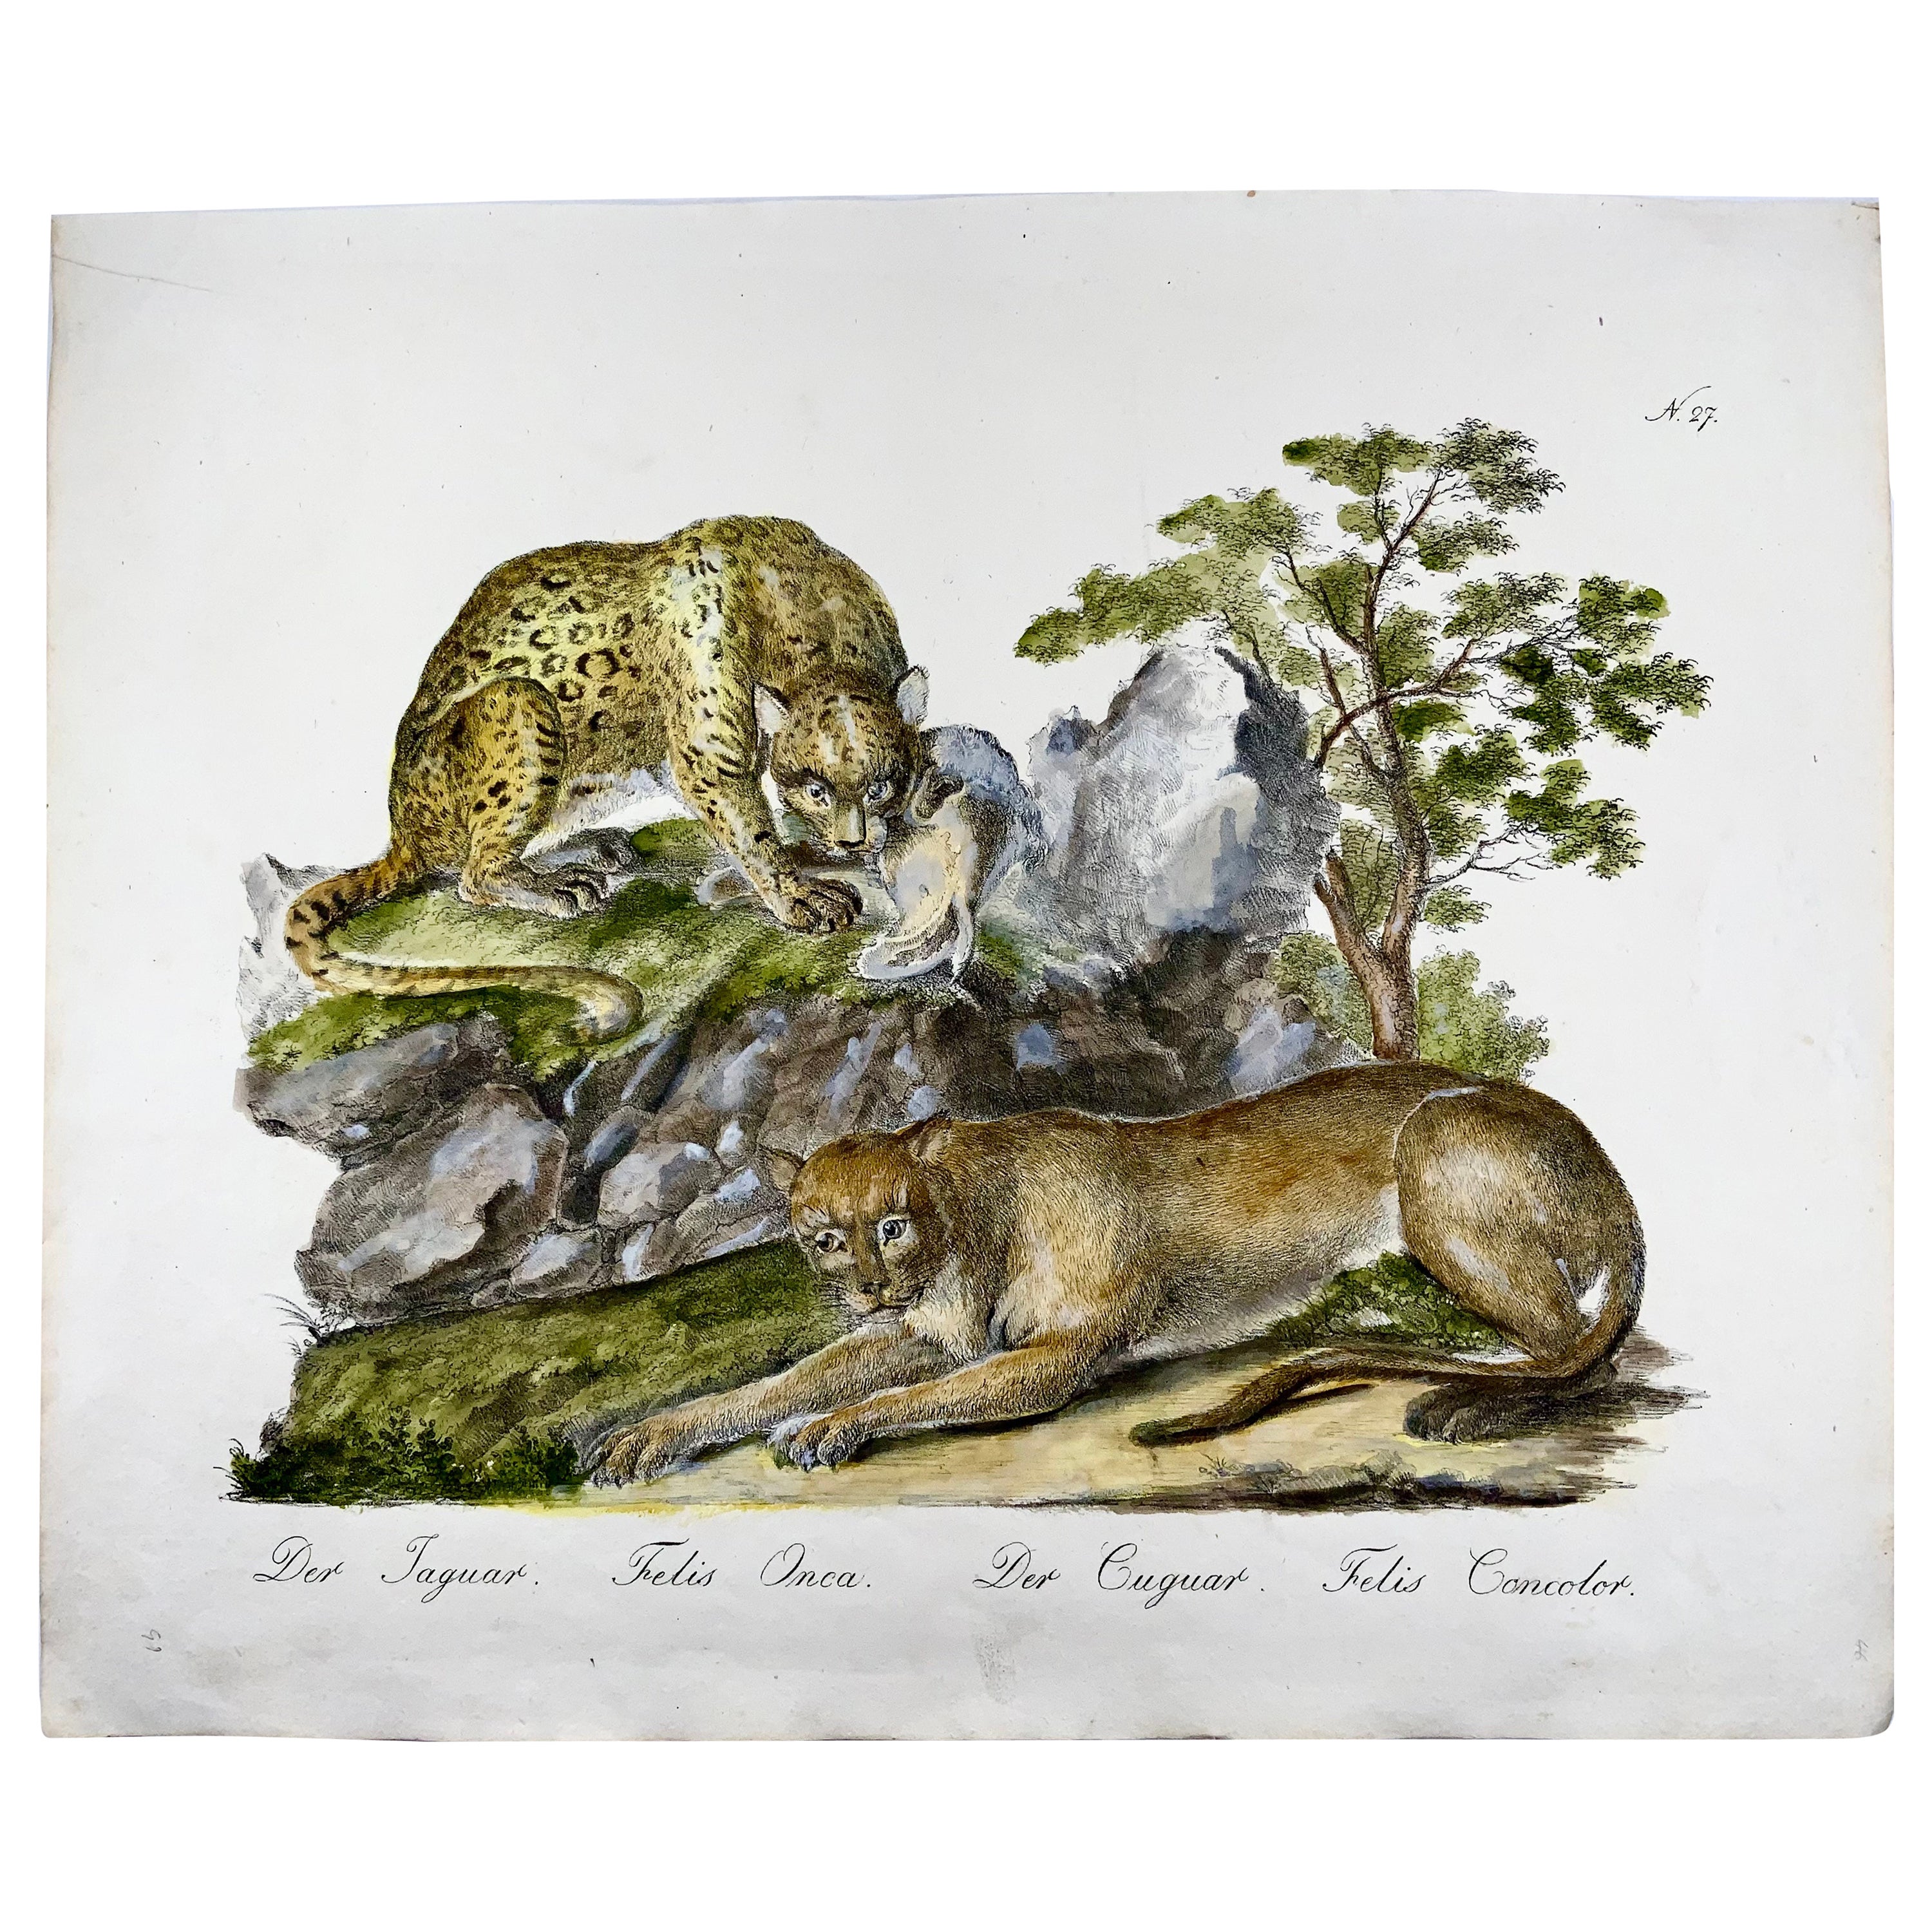 Jaguar, Cougar, Folio impérial, Incunabula de la lithographie, rare